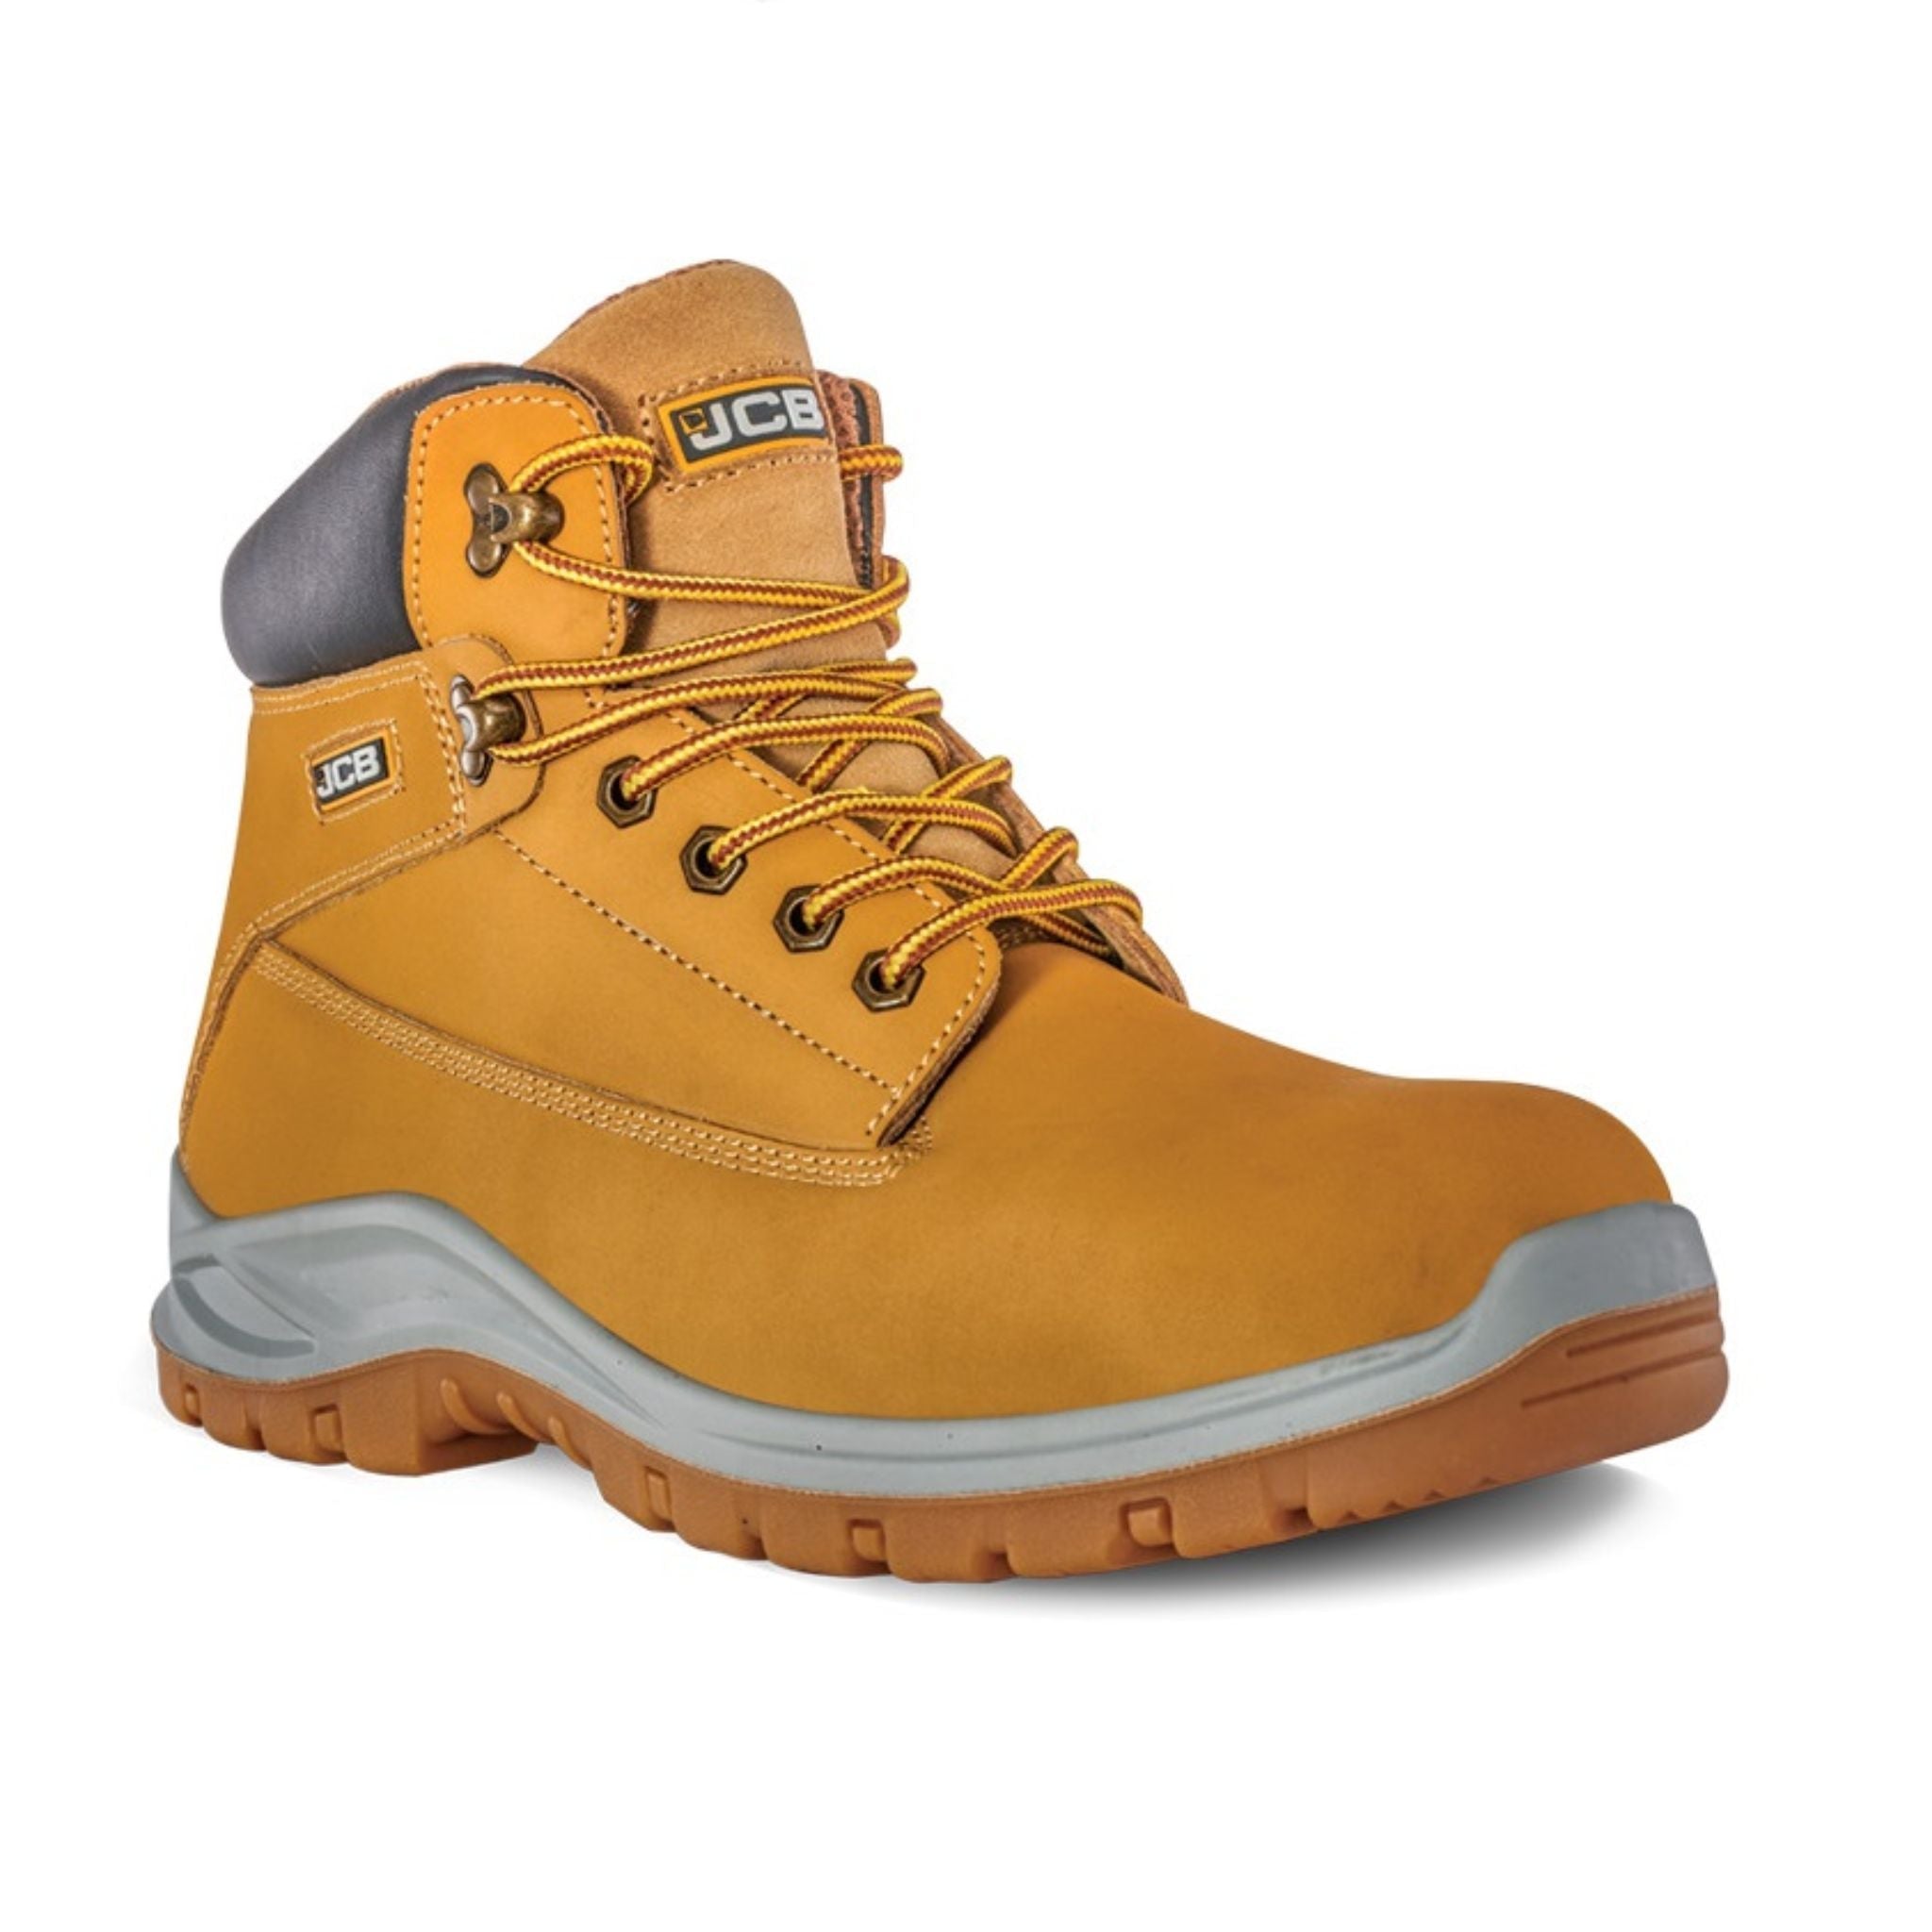 Hiker Honey Nubuck Safety Shoe-Shoes-4